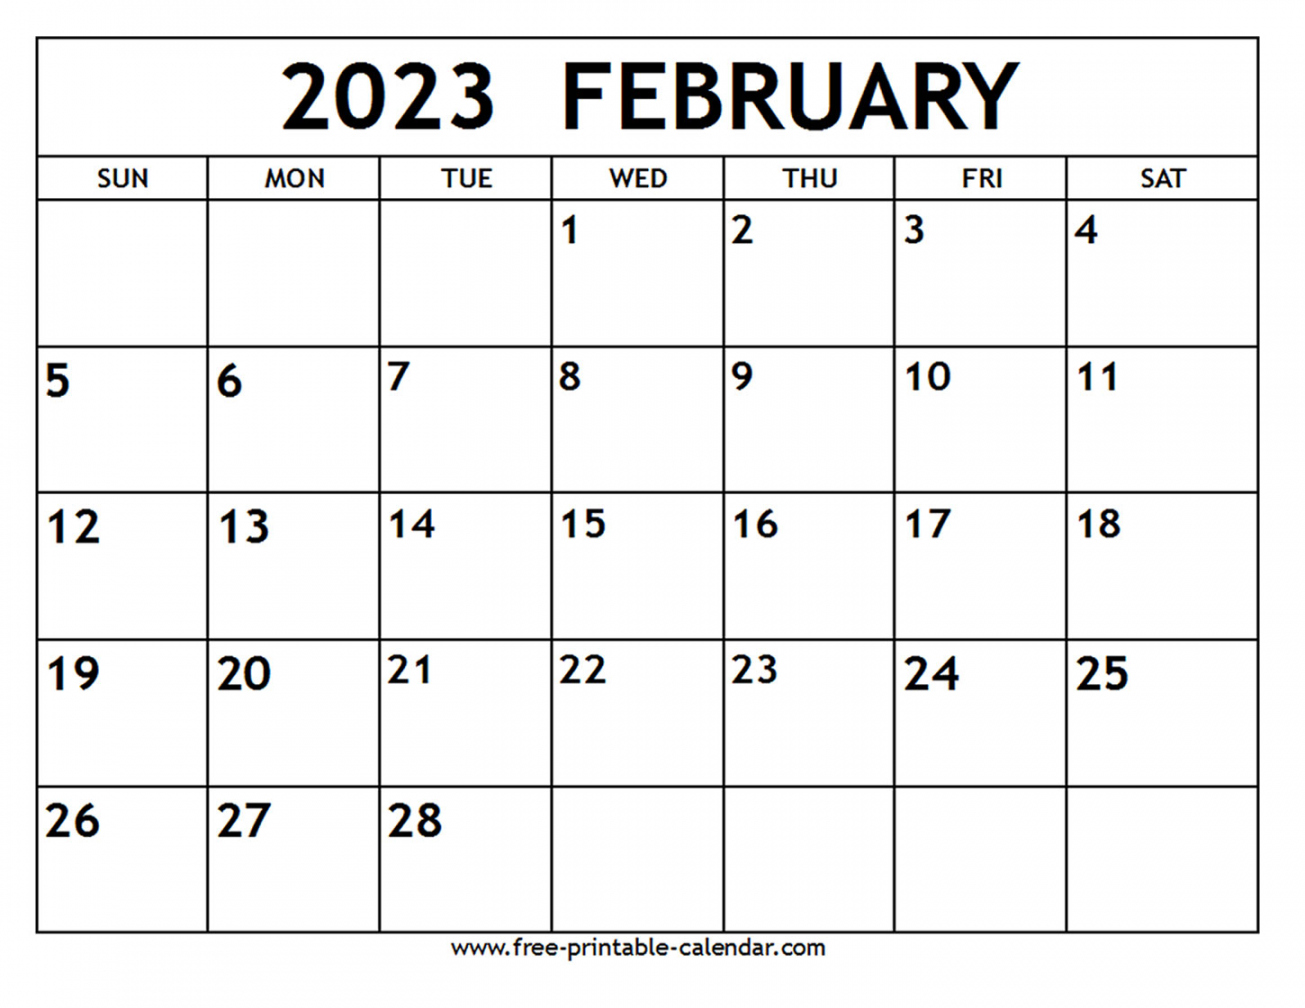 Free Printable Calendar February 2023 - Printable - February  Calendar - Free-printable-calendar